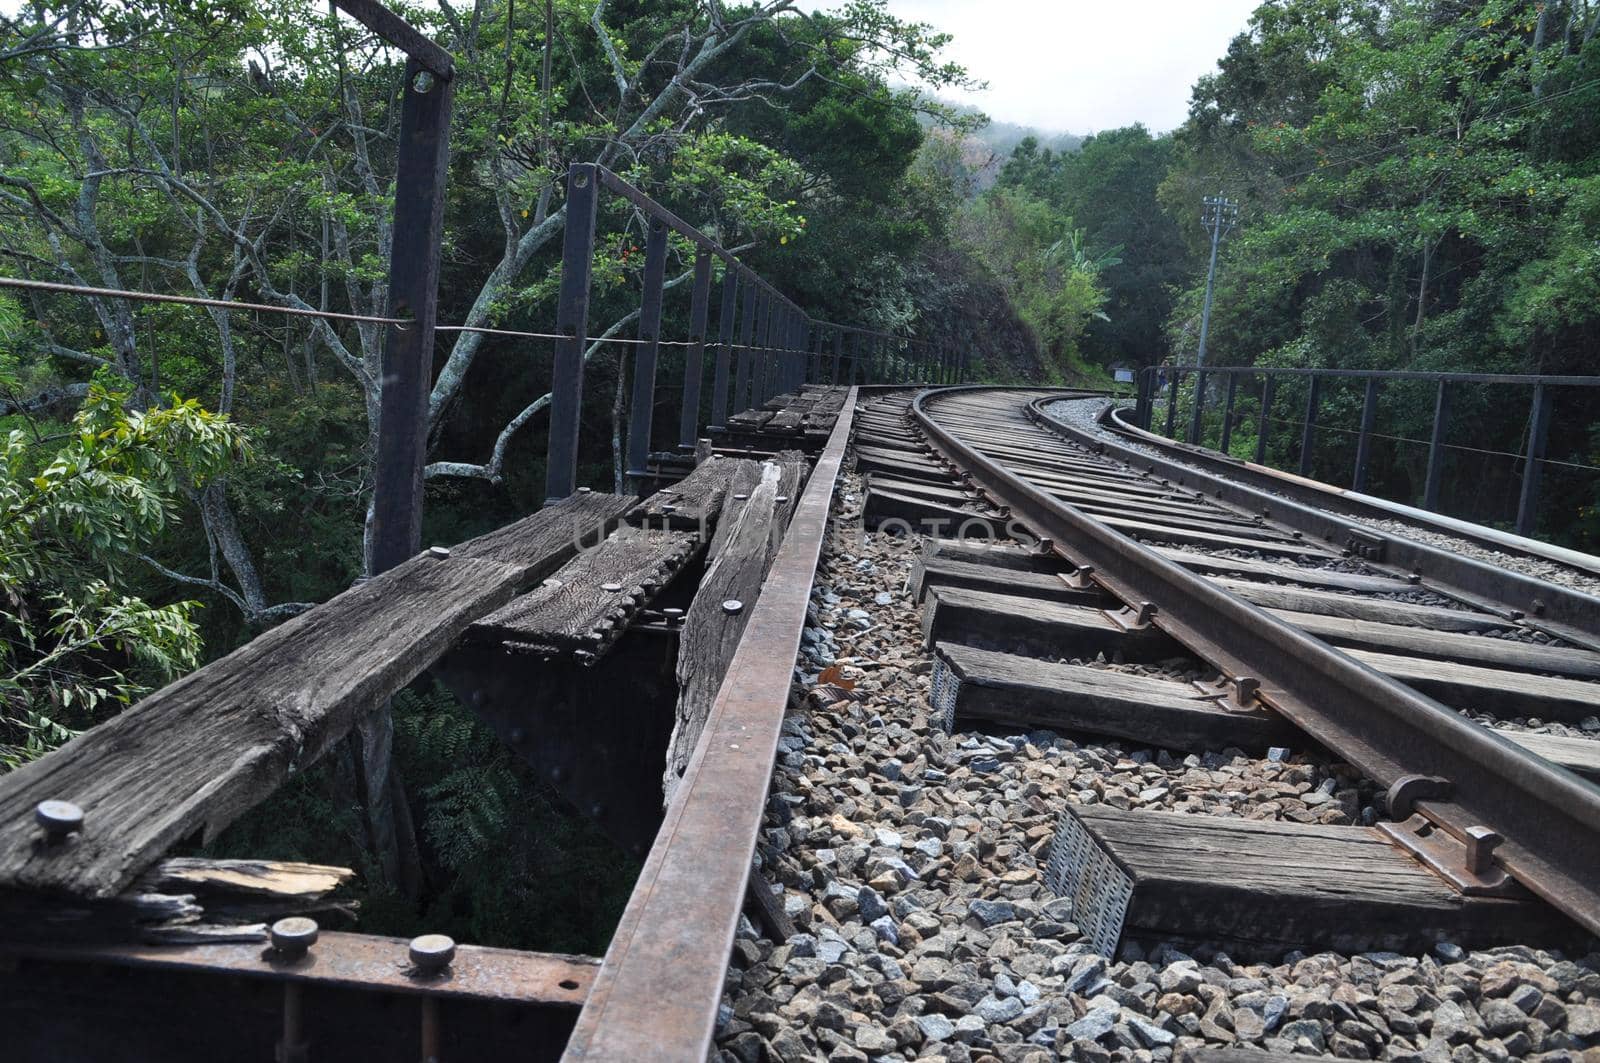 Rail road track between Ella and Nuwara Eliya, Sri Lanka by Capos